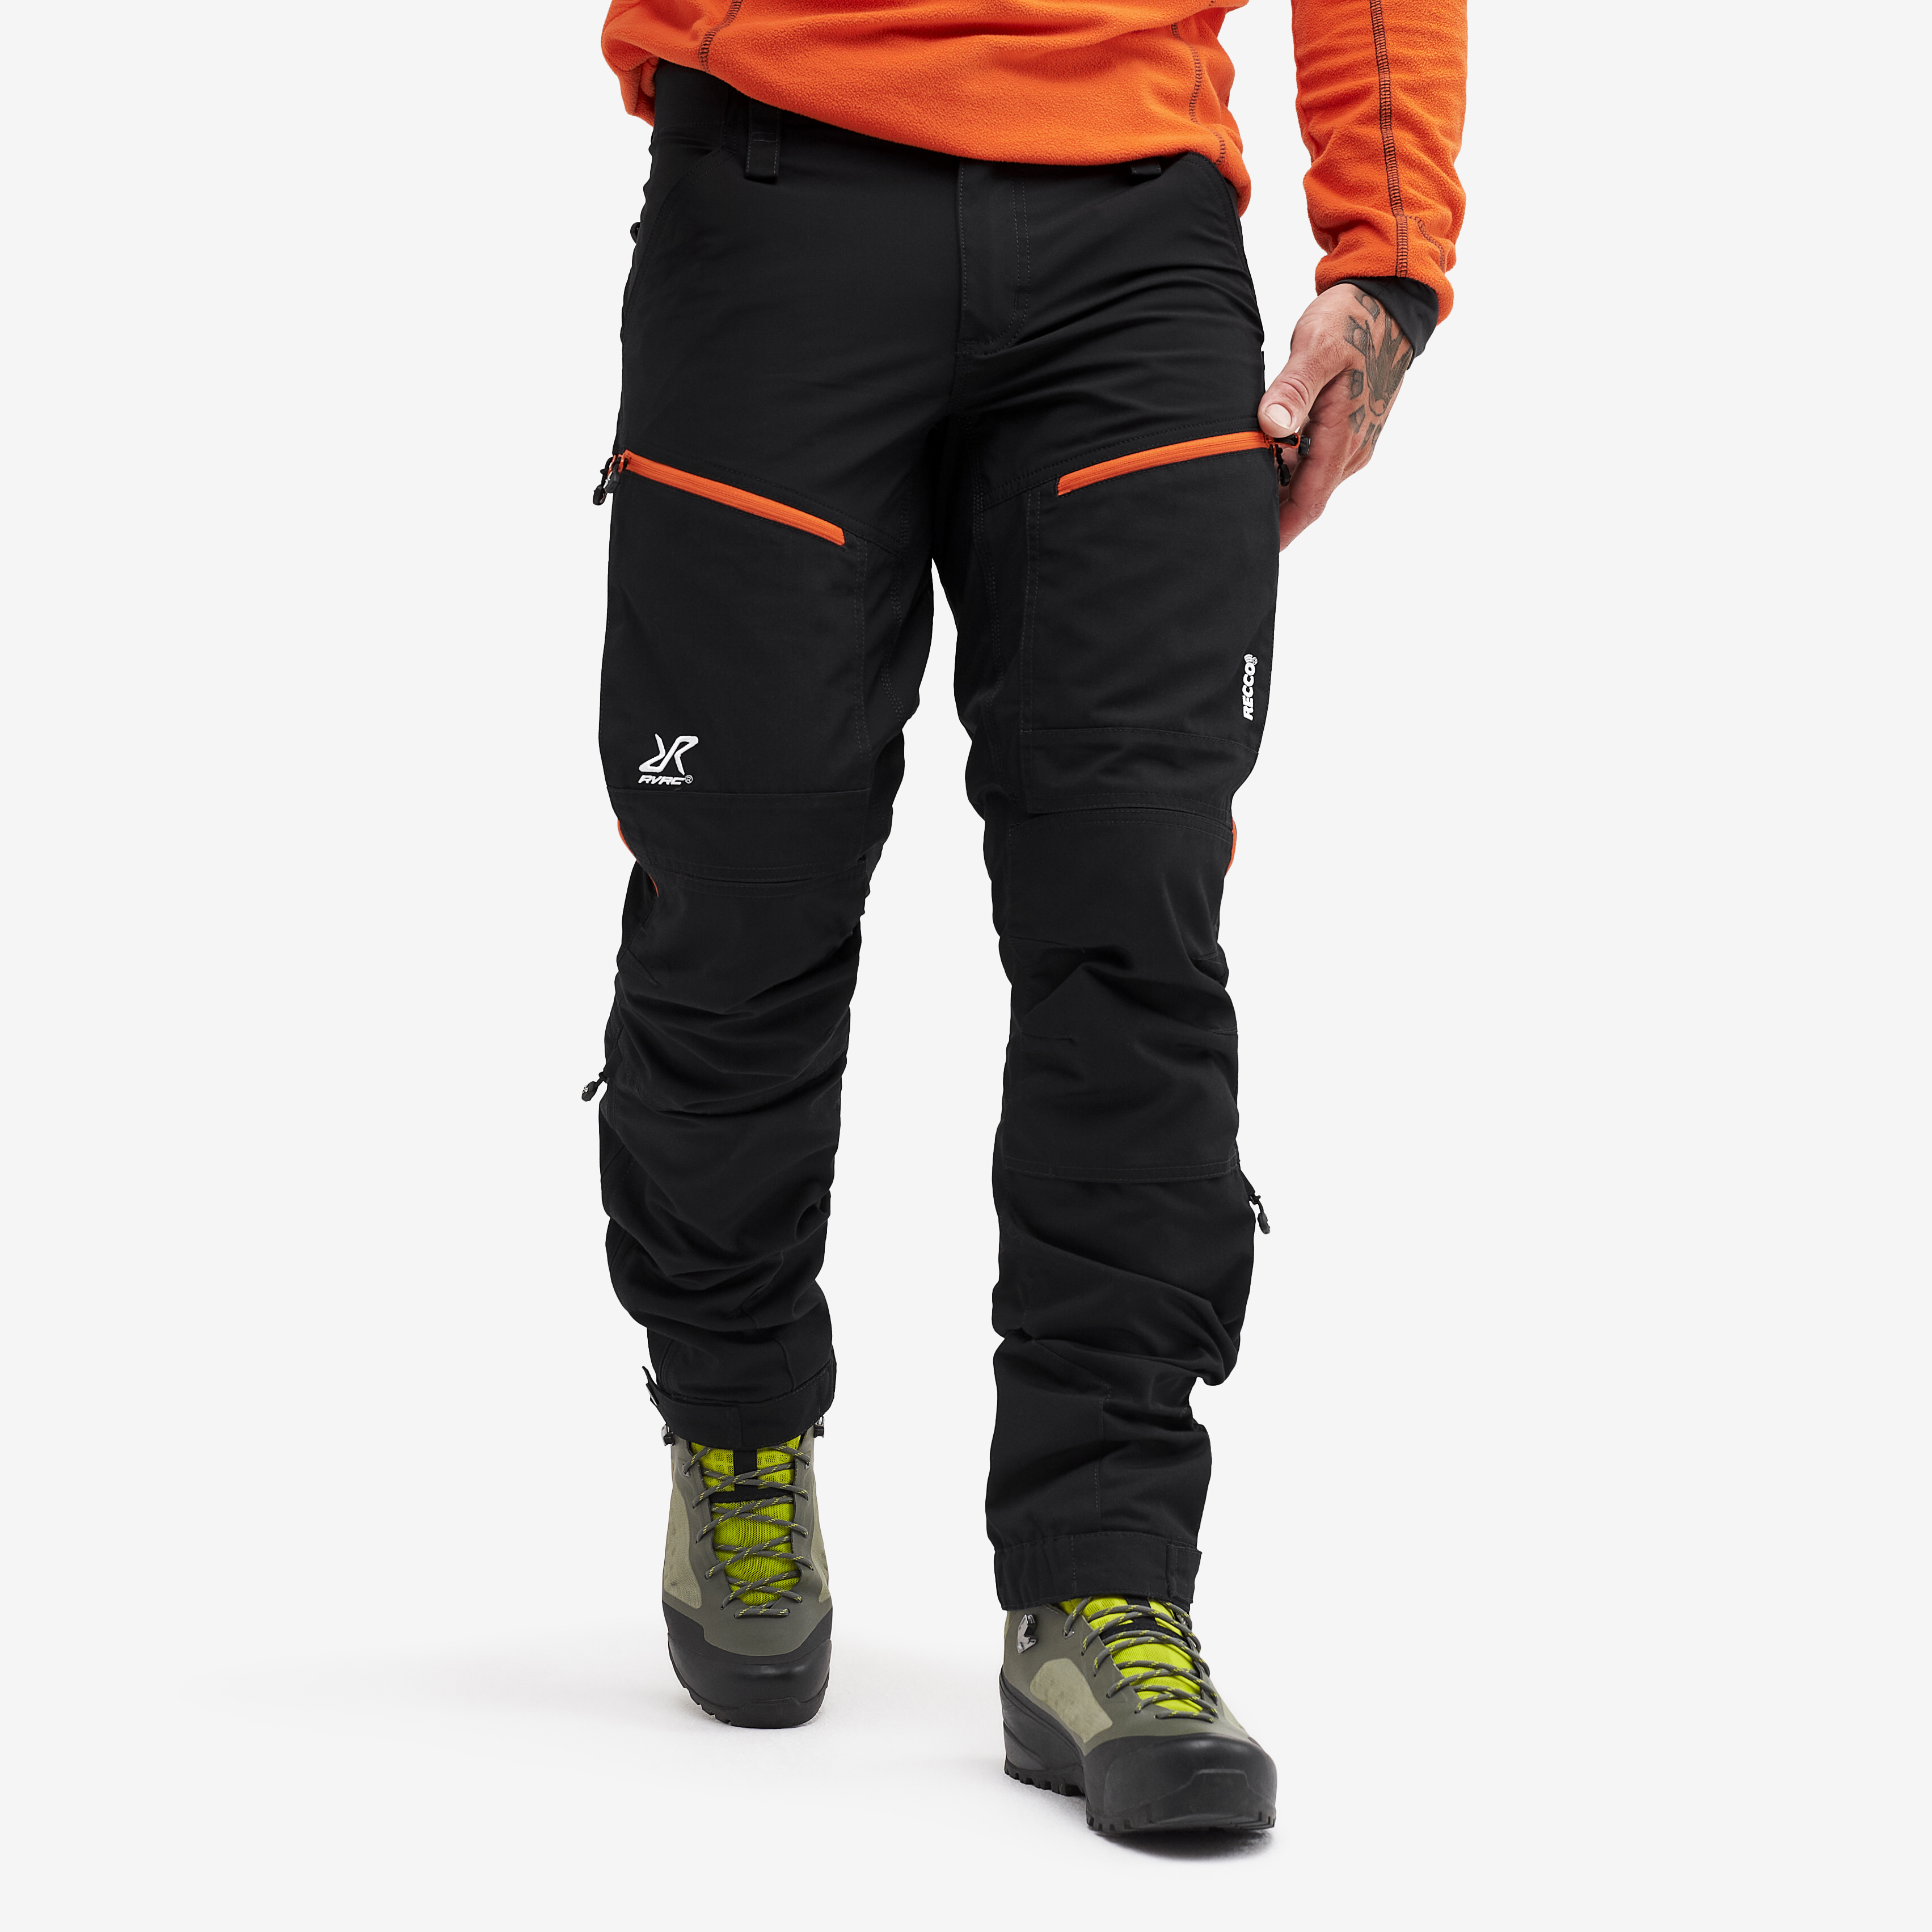 RVRC GP Pro Rescue Pants Black/Orange 2.0 Uomo